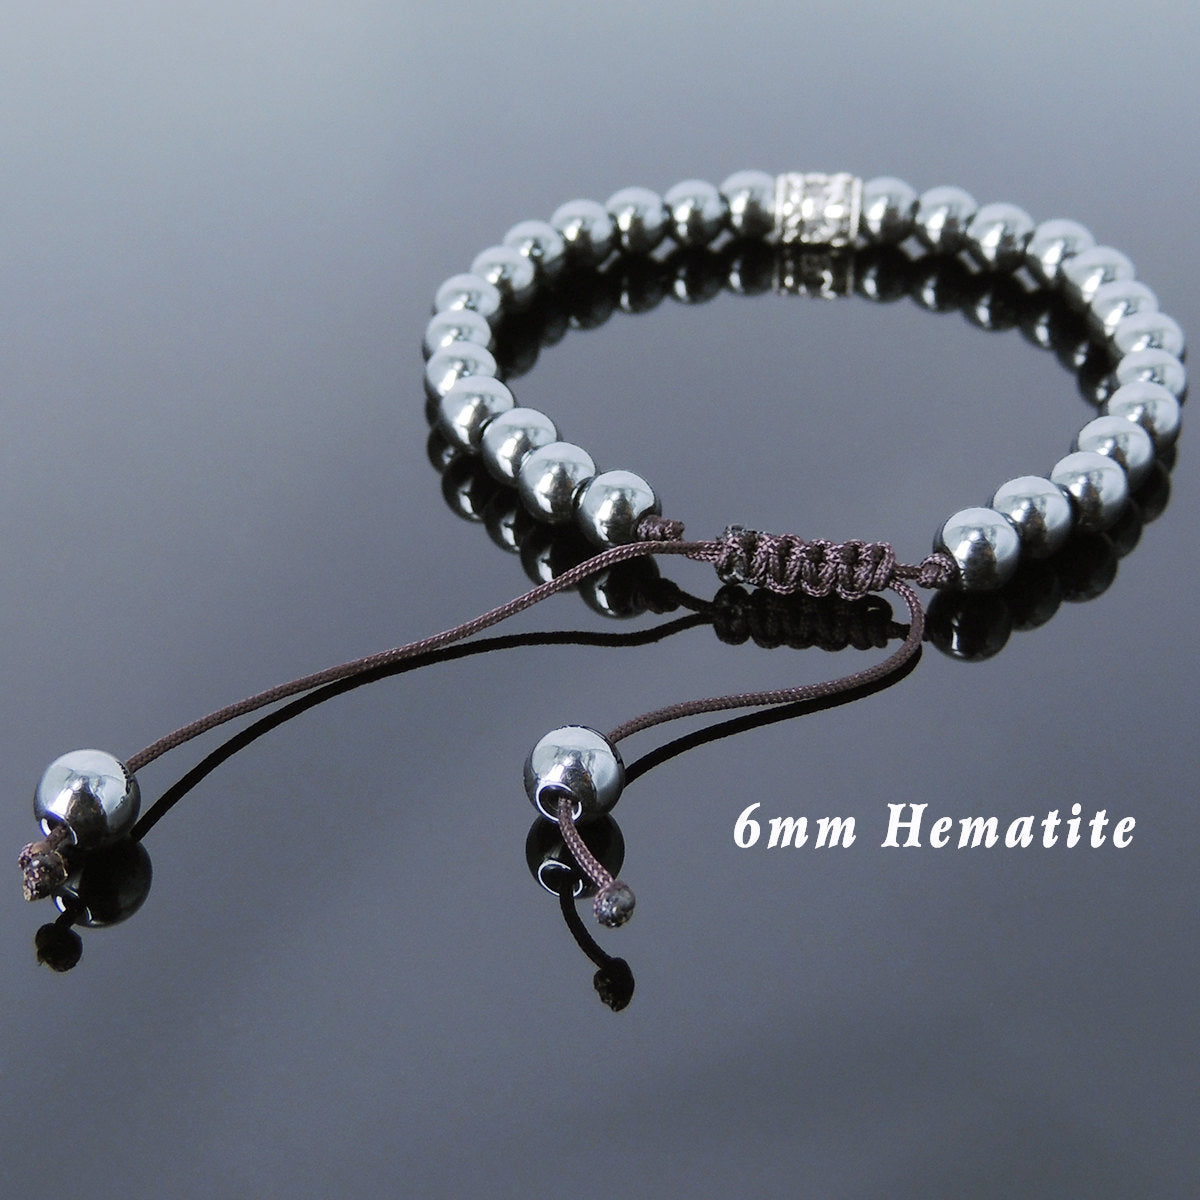 6mm Hematite Adjustable Braided Gemstone Bracelet with S925 Sterling Silver Fleur de Lis Barrel Bead - Handmade by Gem & Silver BR774